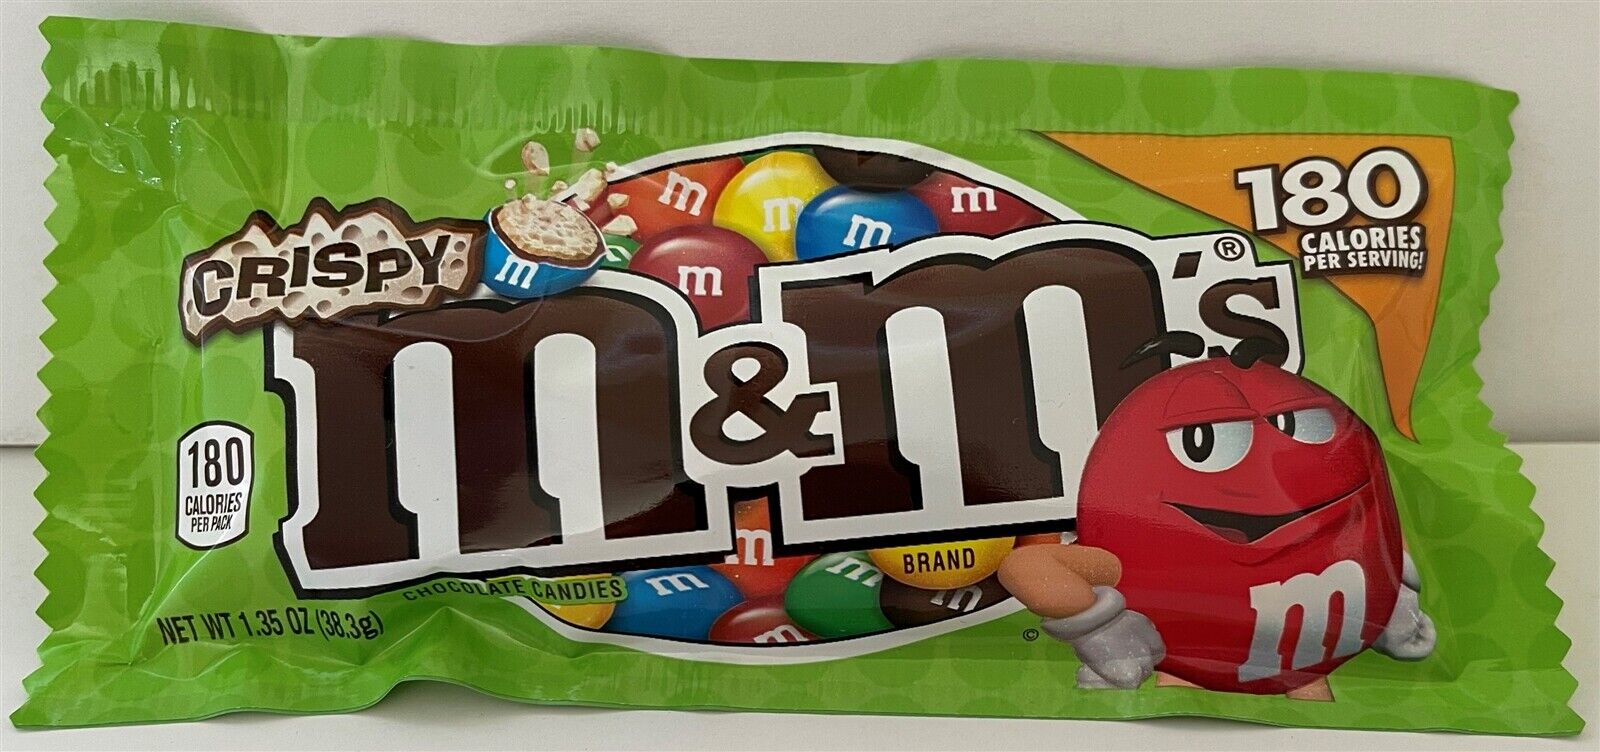 m&m\'s CRISPY chocolate candies USA - 1.35 oz green bag - UPC lower-left corner